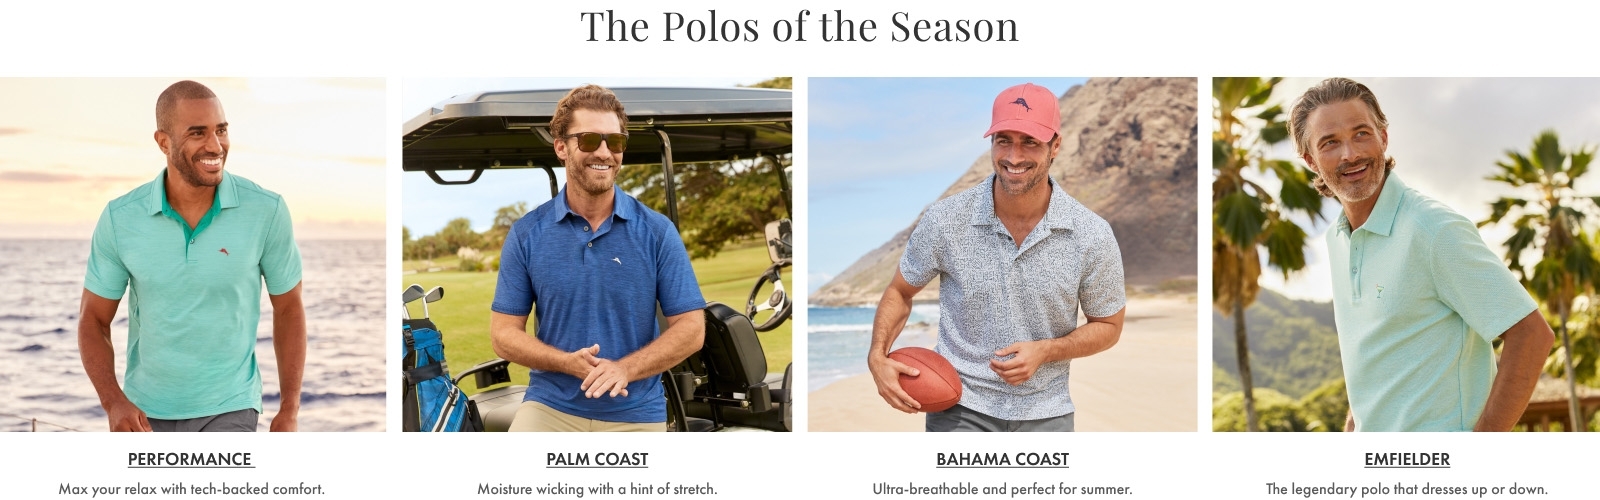 The Polos of the Season